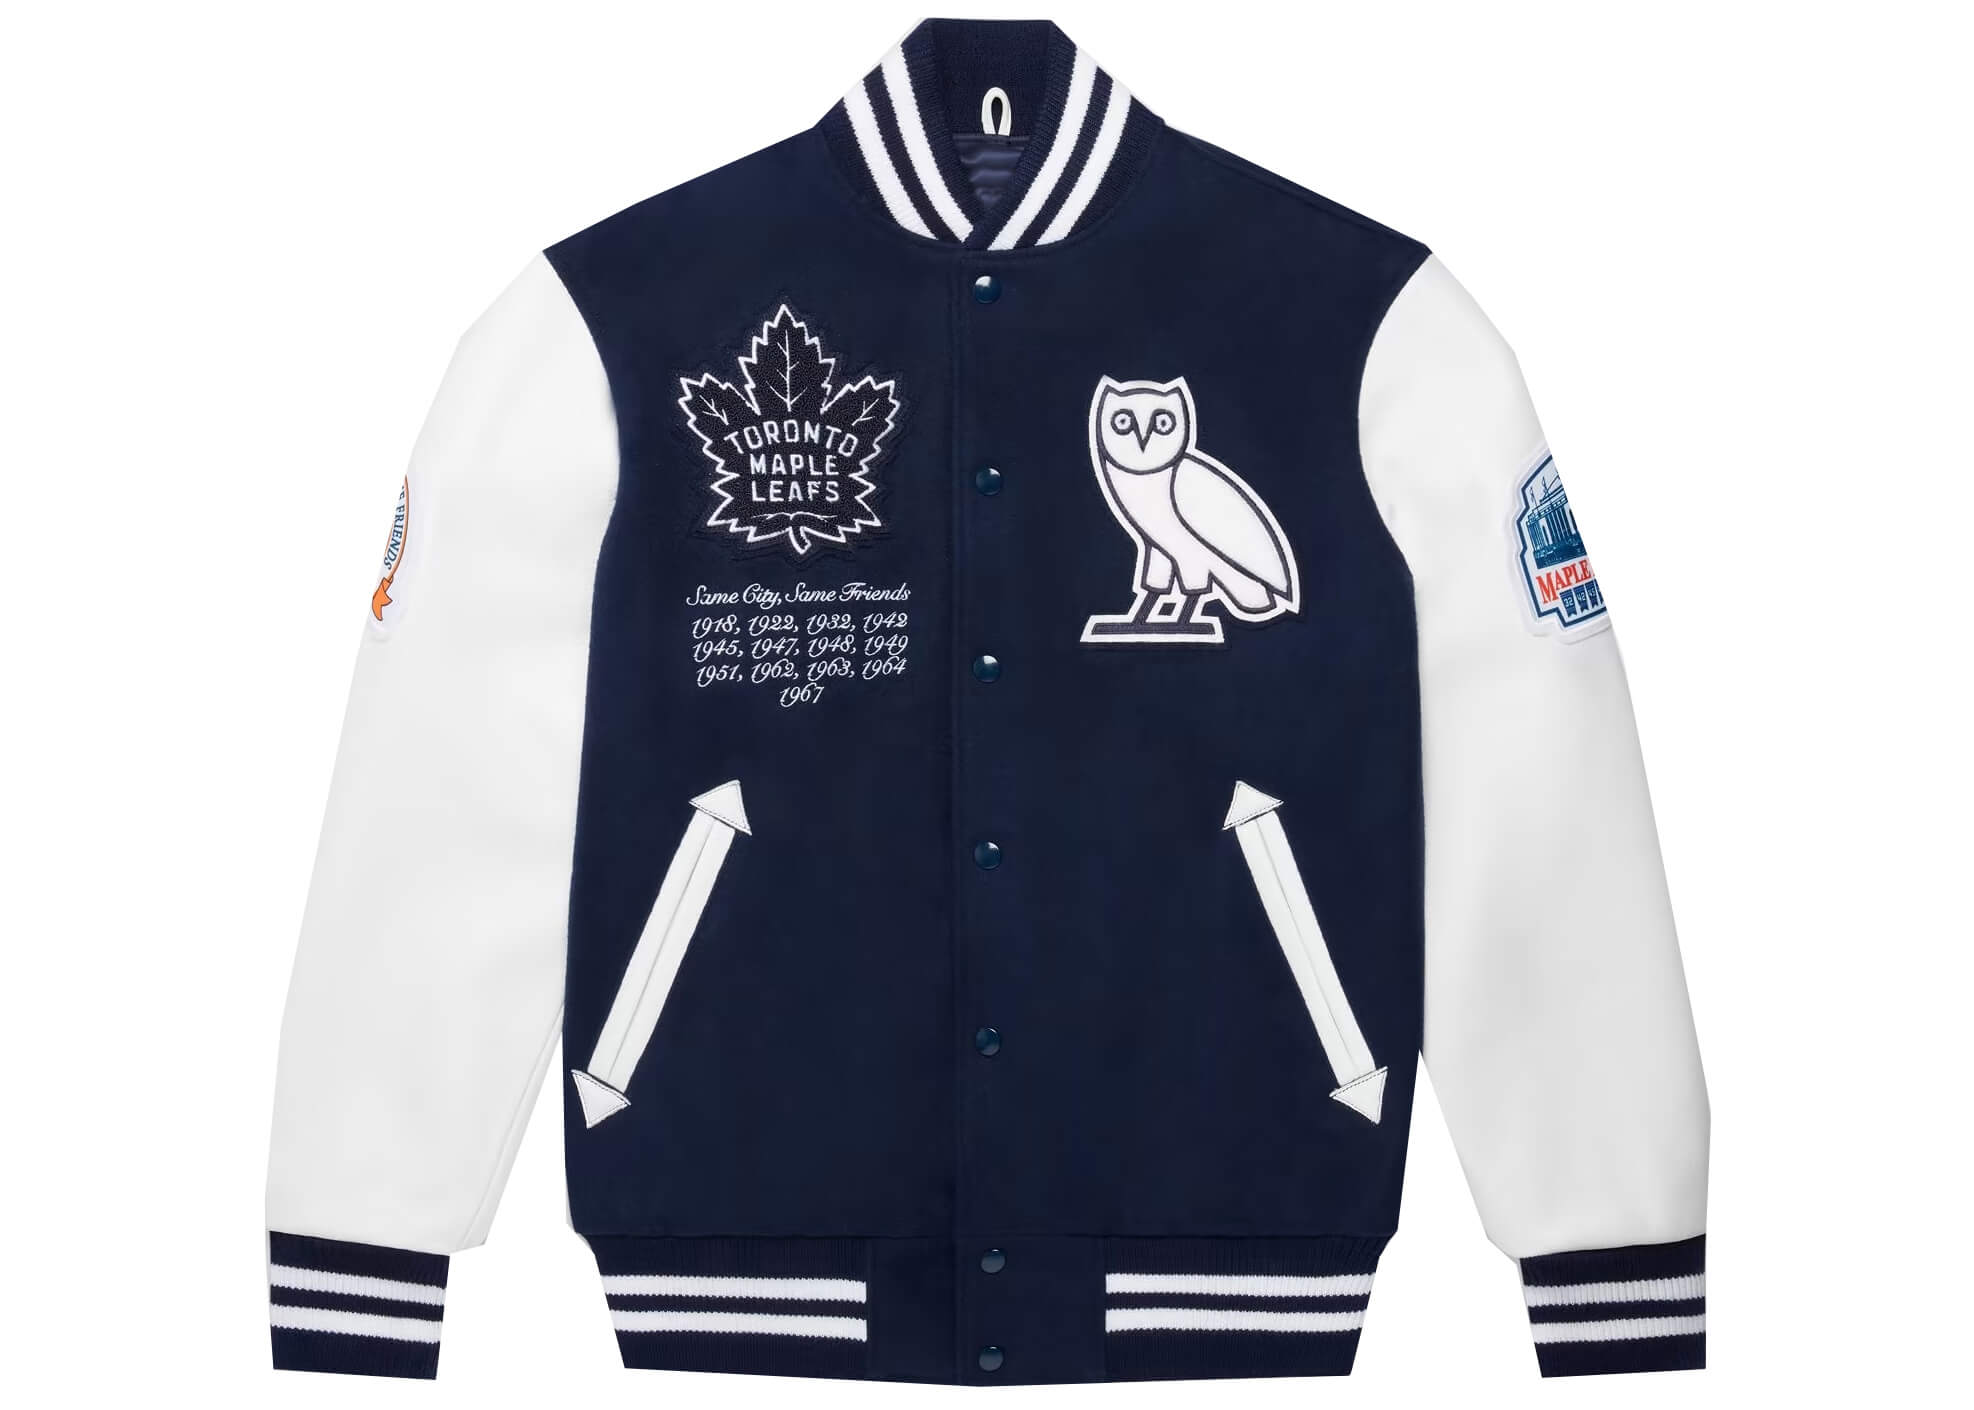 Varsity Toronto Maple Leafs Navy Blue Wool Jacket